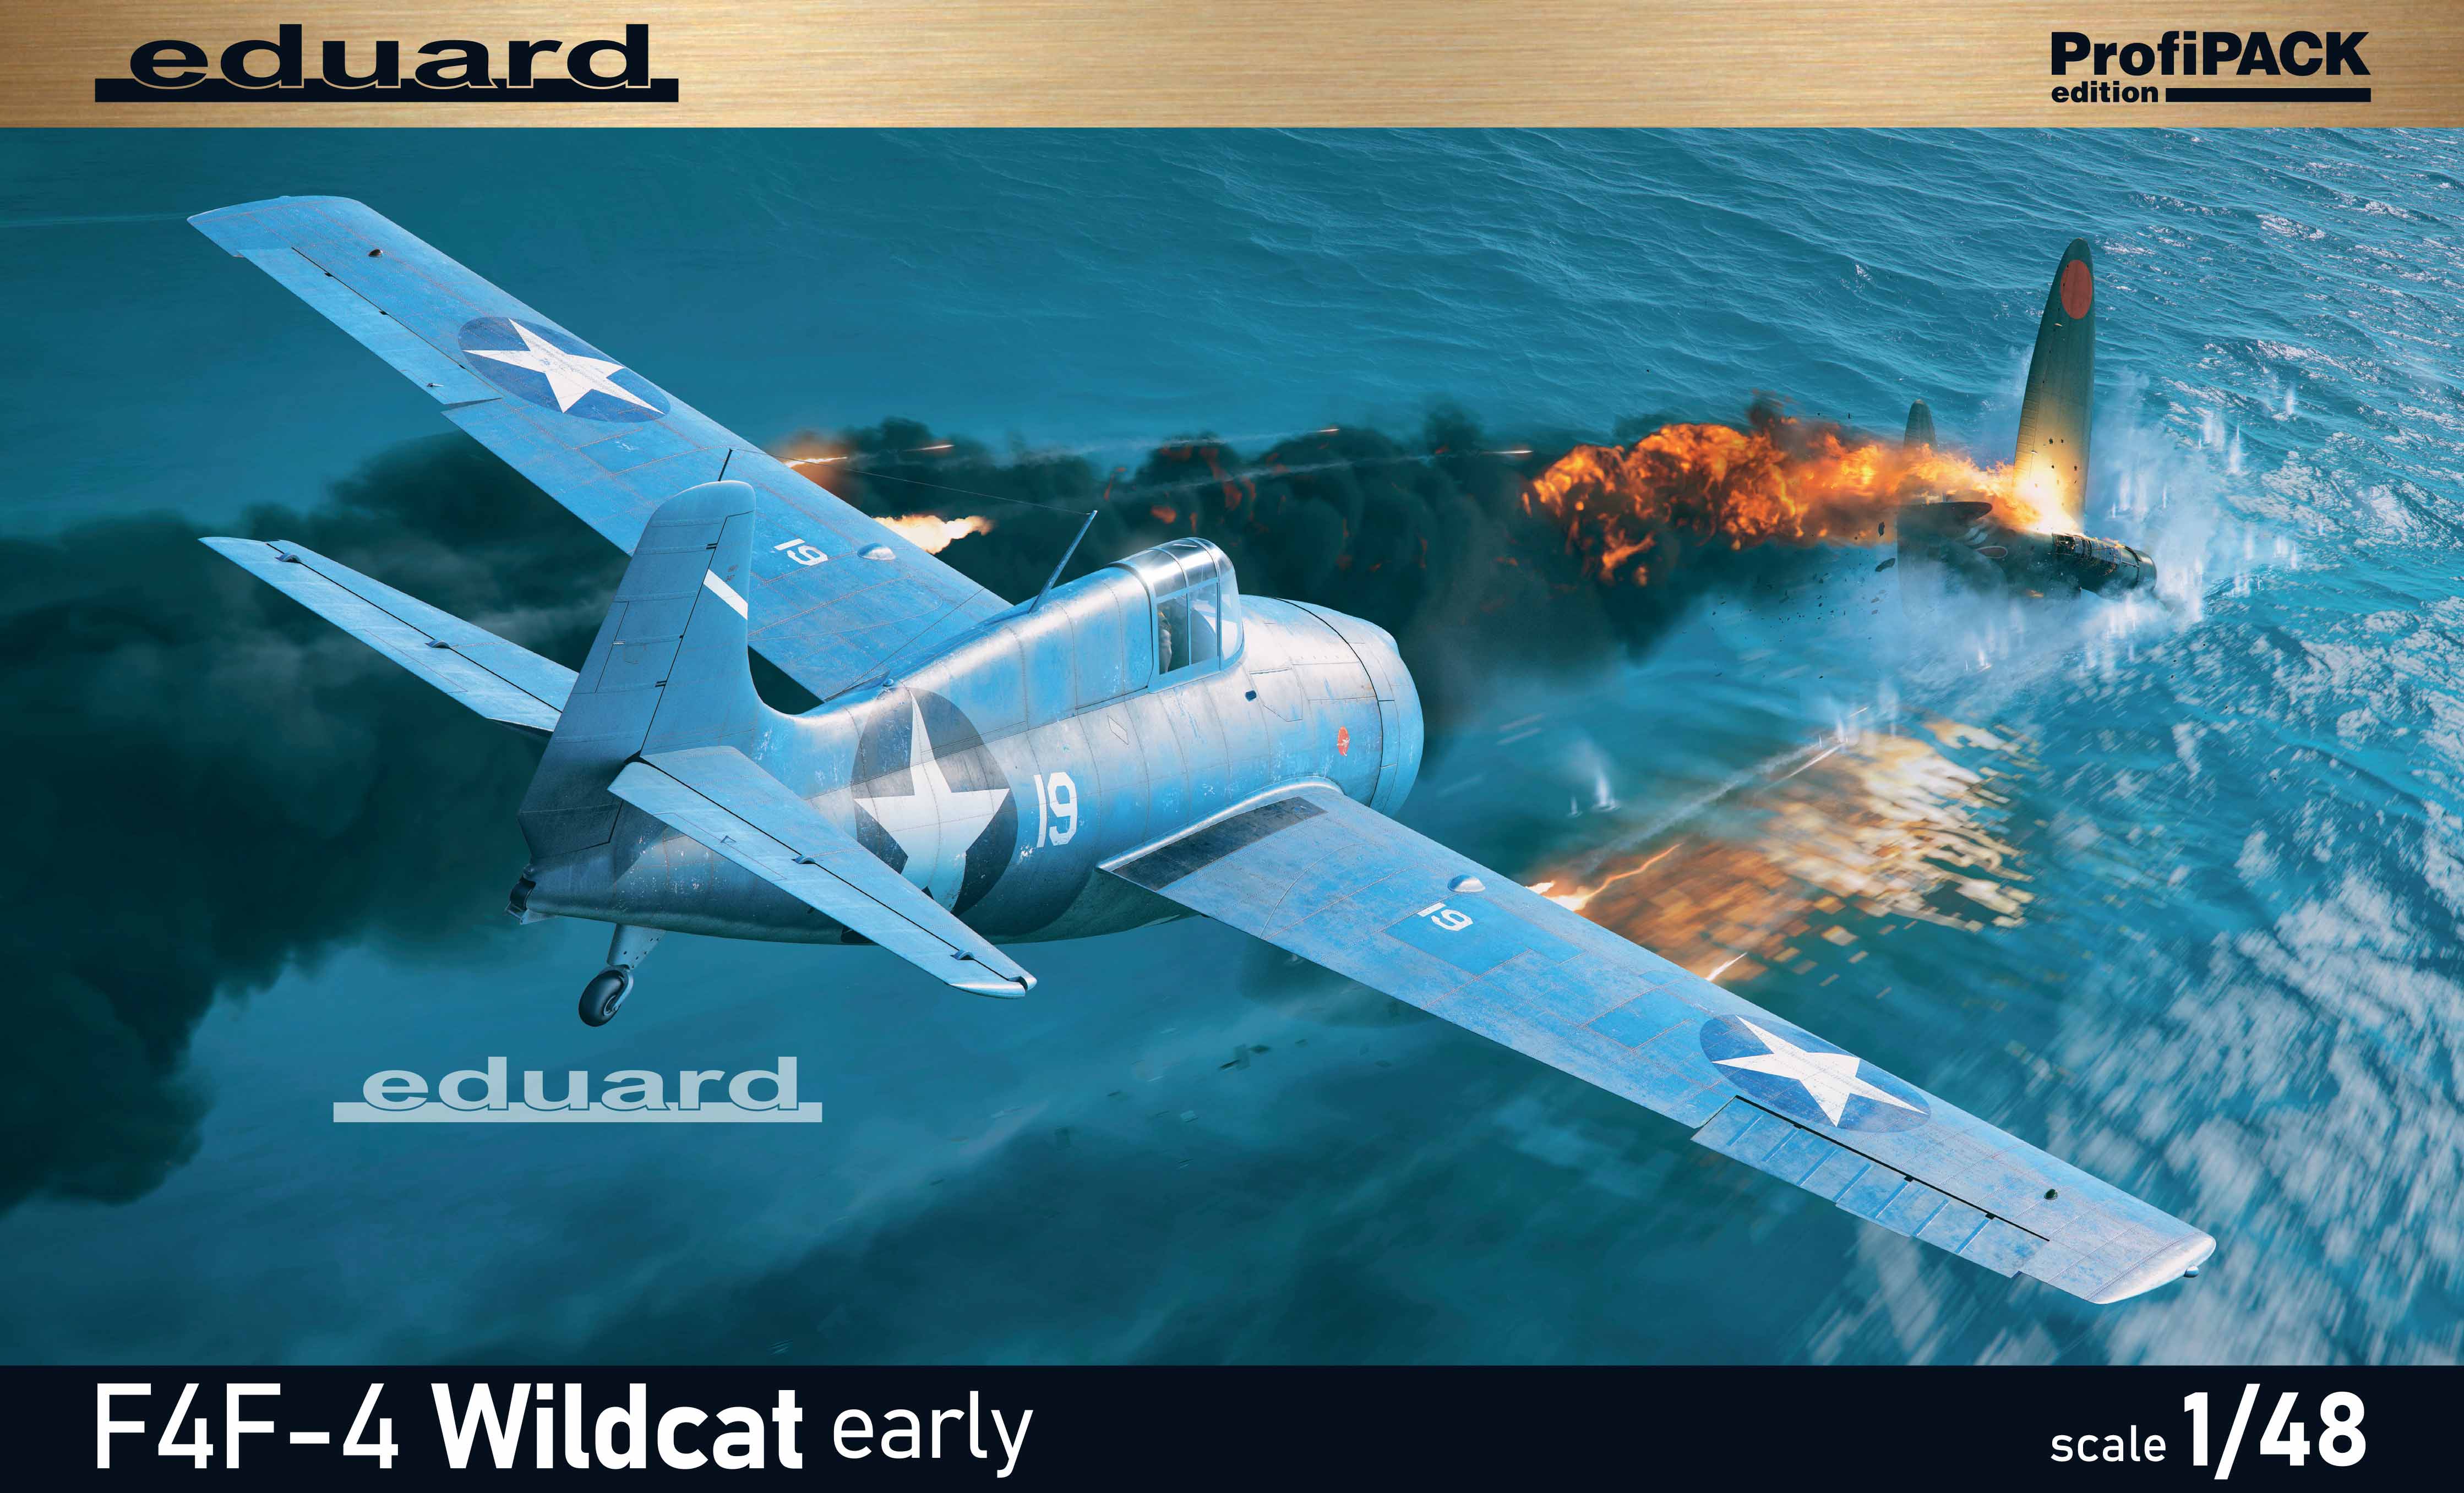 Сборная модель 1/48 Grumman F4F-4 Wildcat early ProfiPACK edition (Eduard kits)